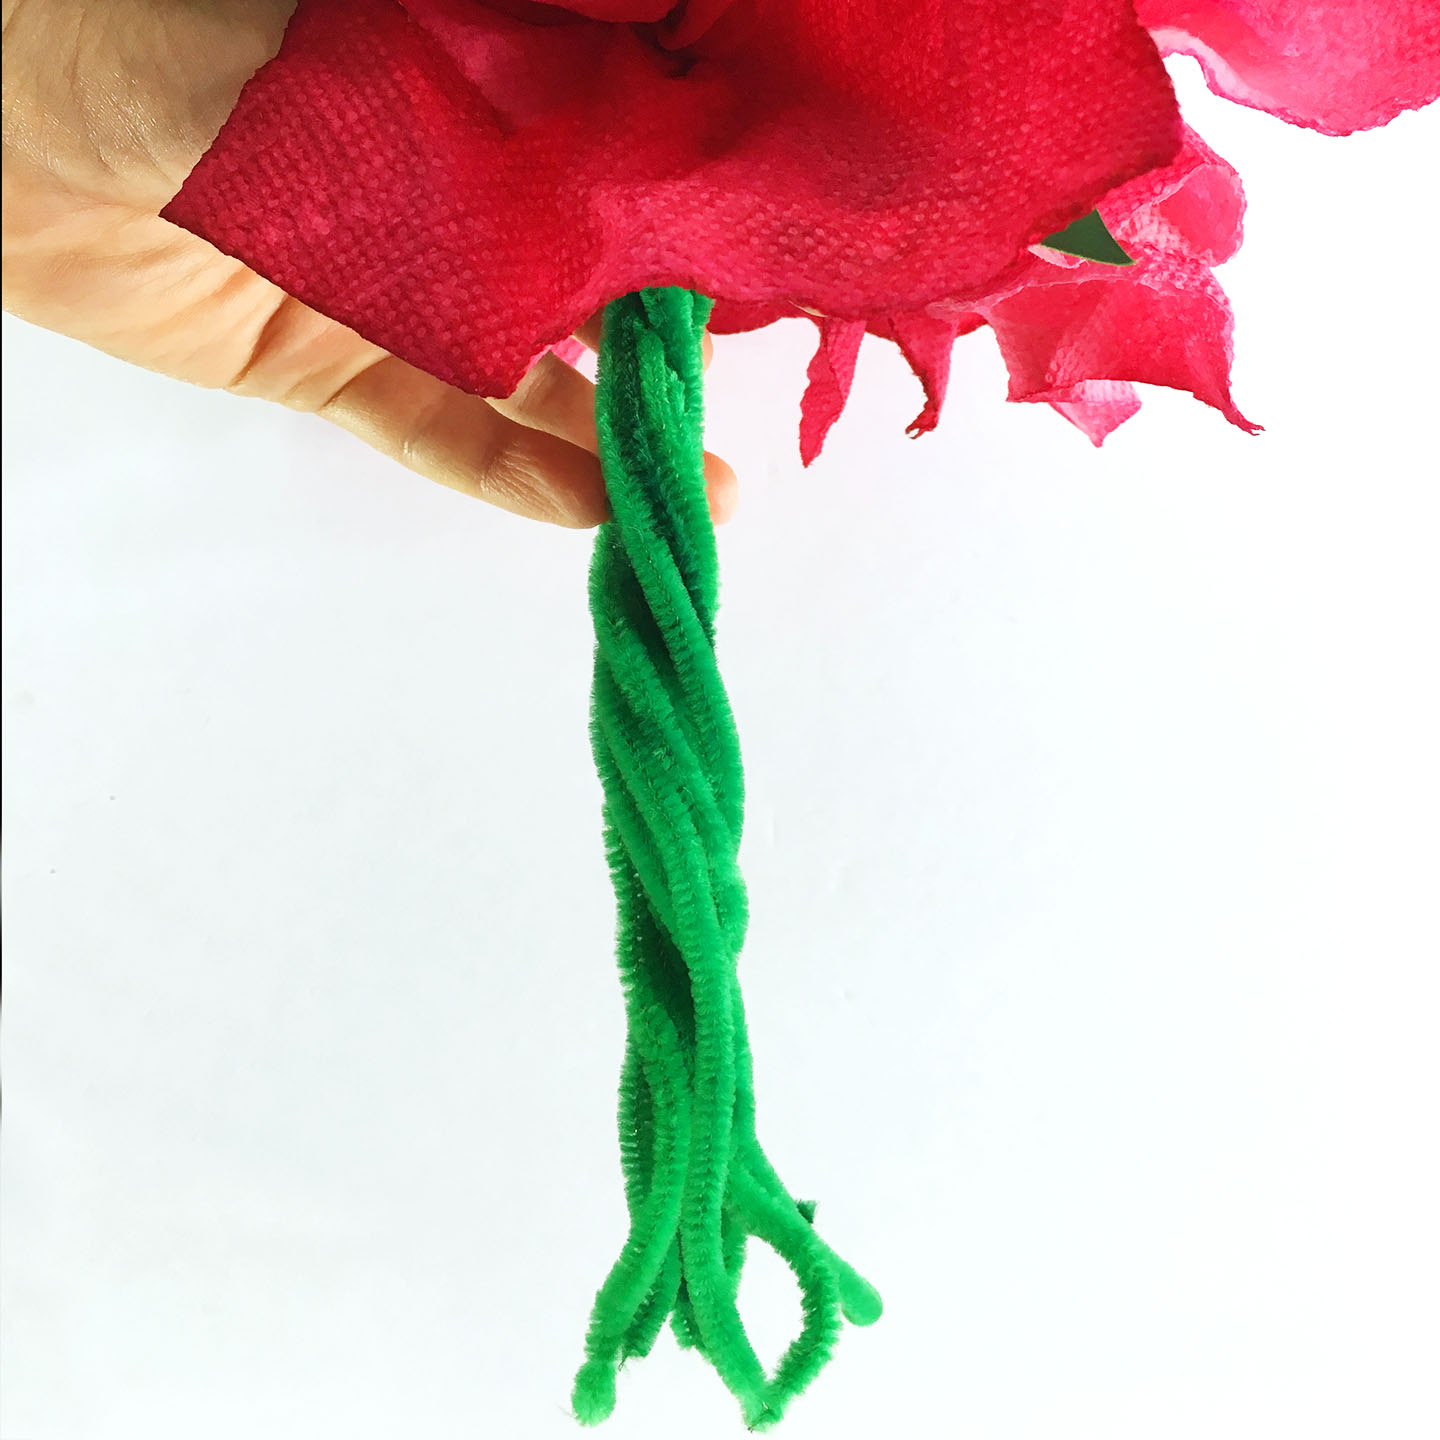 Poinsettia craft for kids twist stems